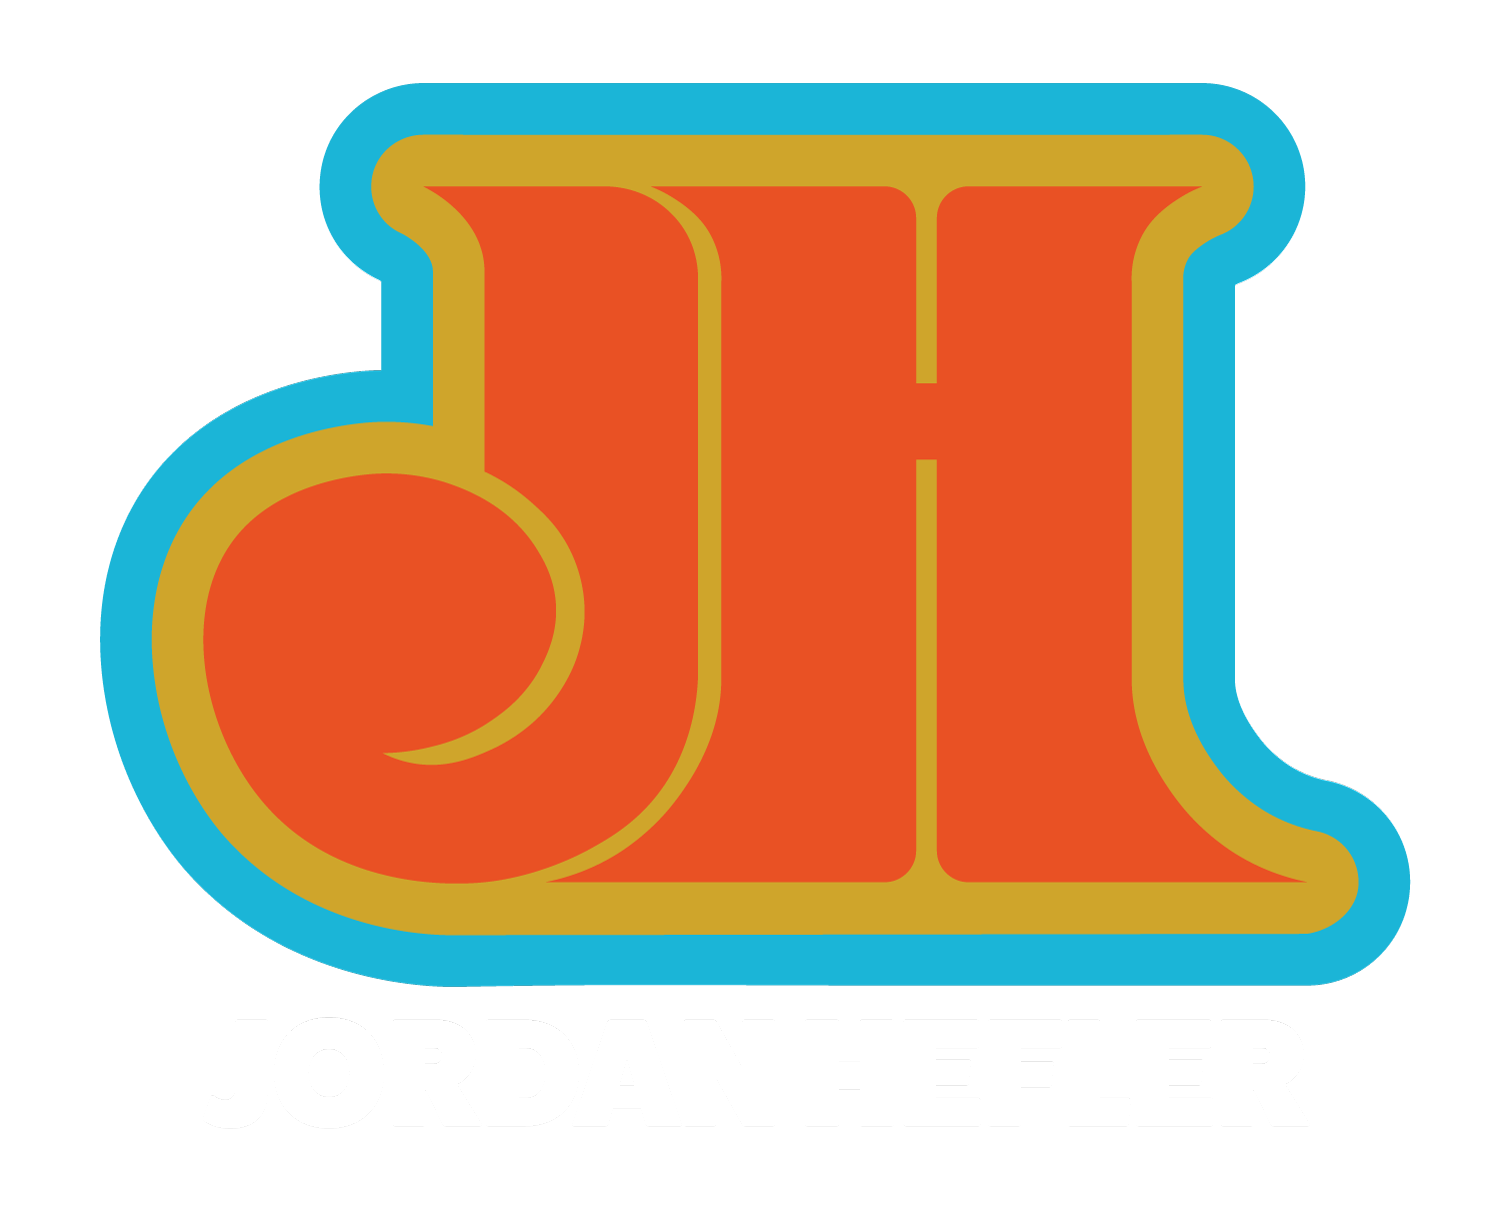 JORDAN HEFLER